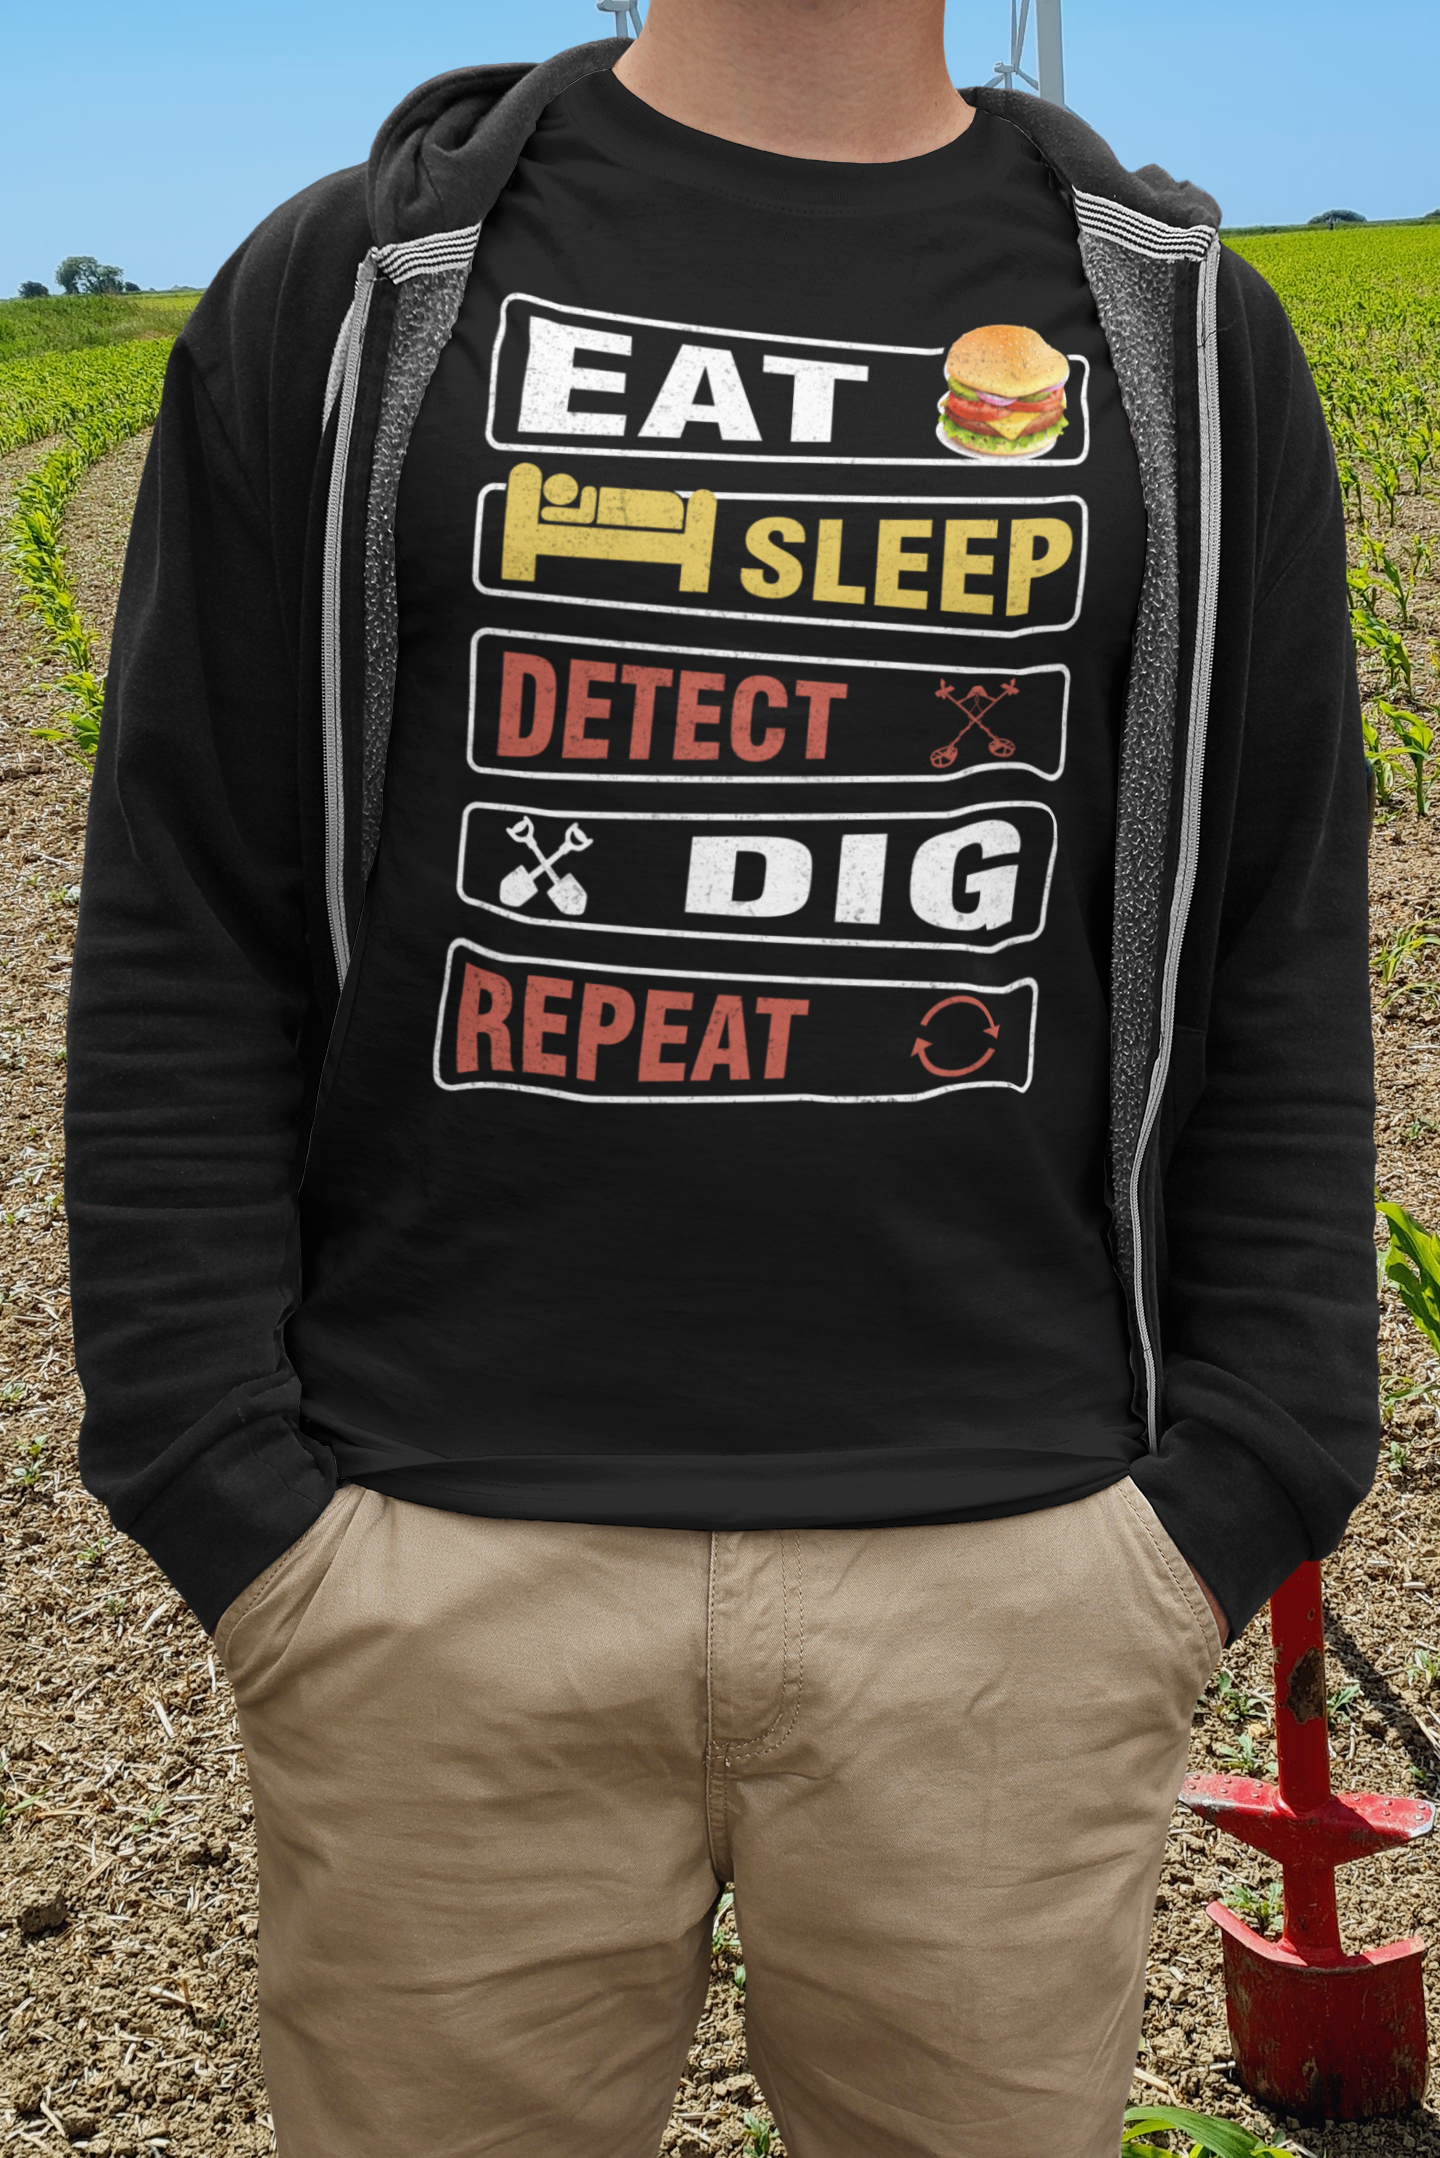 Eat, Sleep, Detect, Dig, Repeat T-shirt